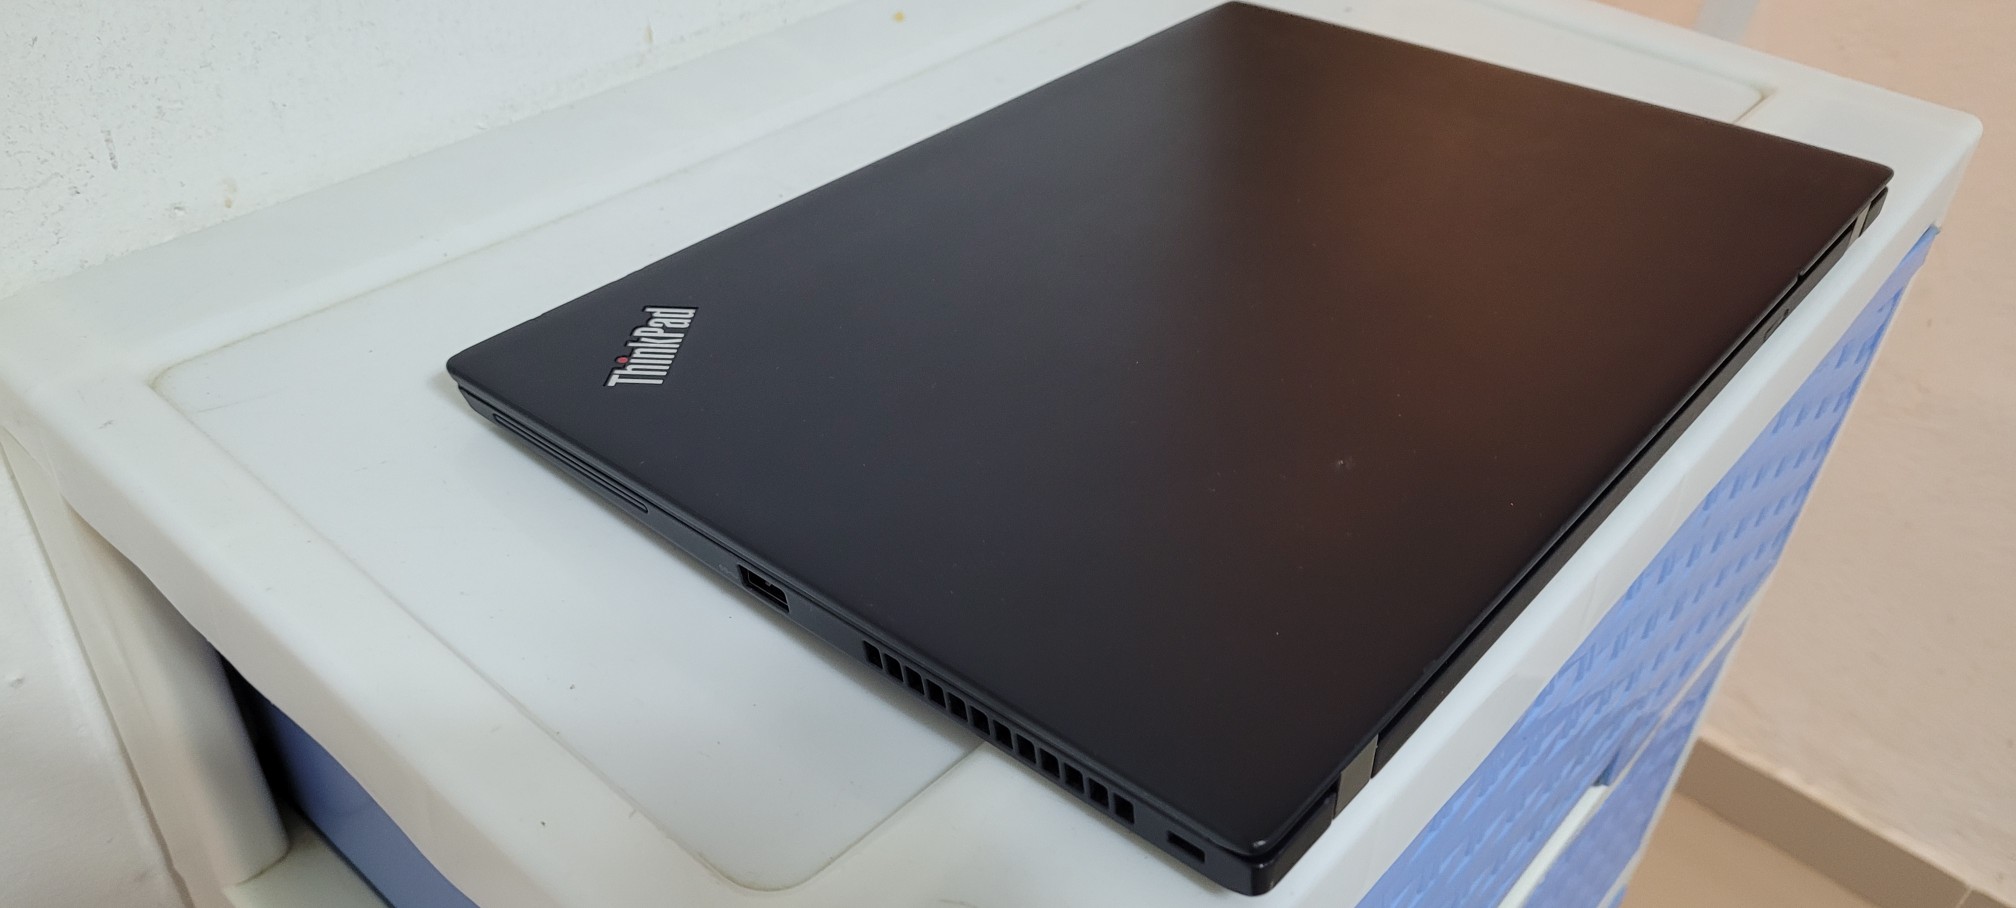 computadoras y laptops - Lenovo T460s 14 Pulg Core i5 6ta Gen Ram 8gb ddr4 Disco 256gb wifi bluetoth 2